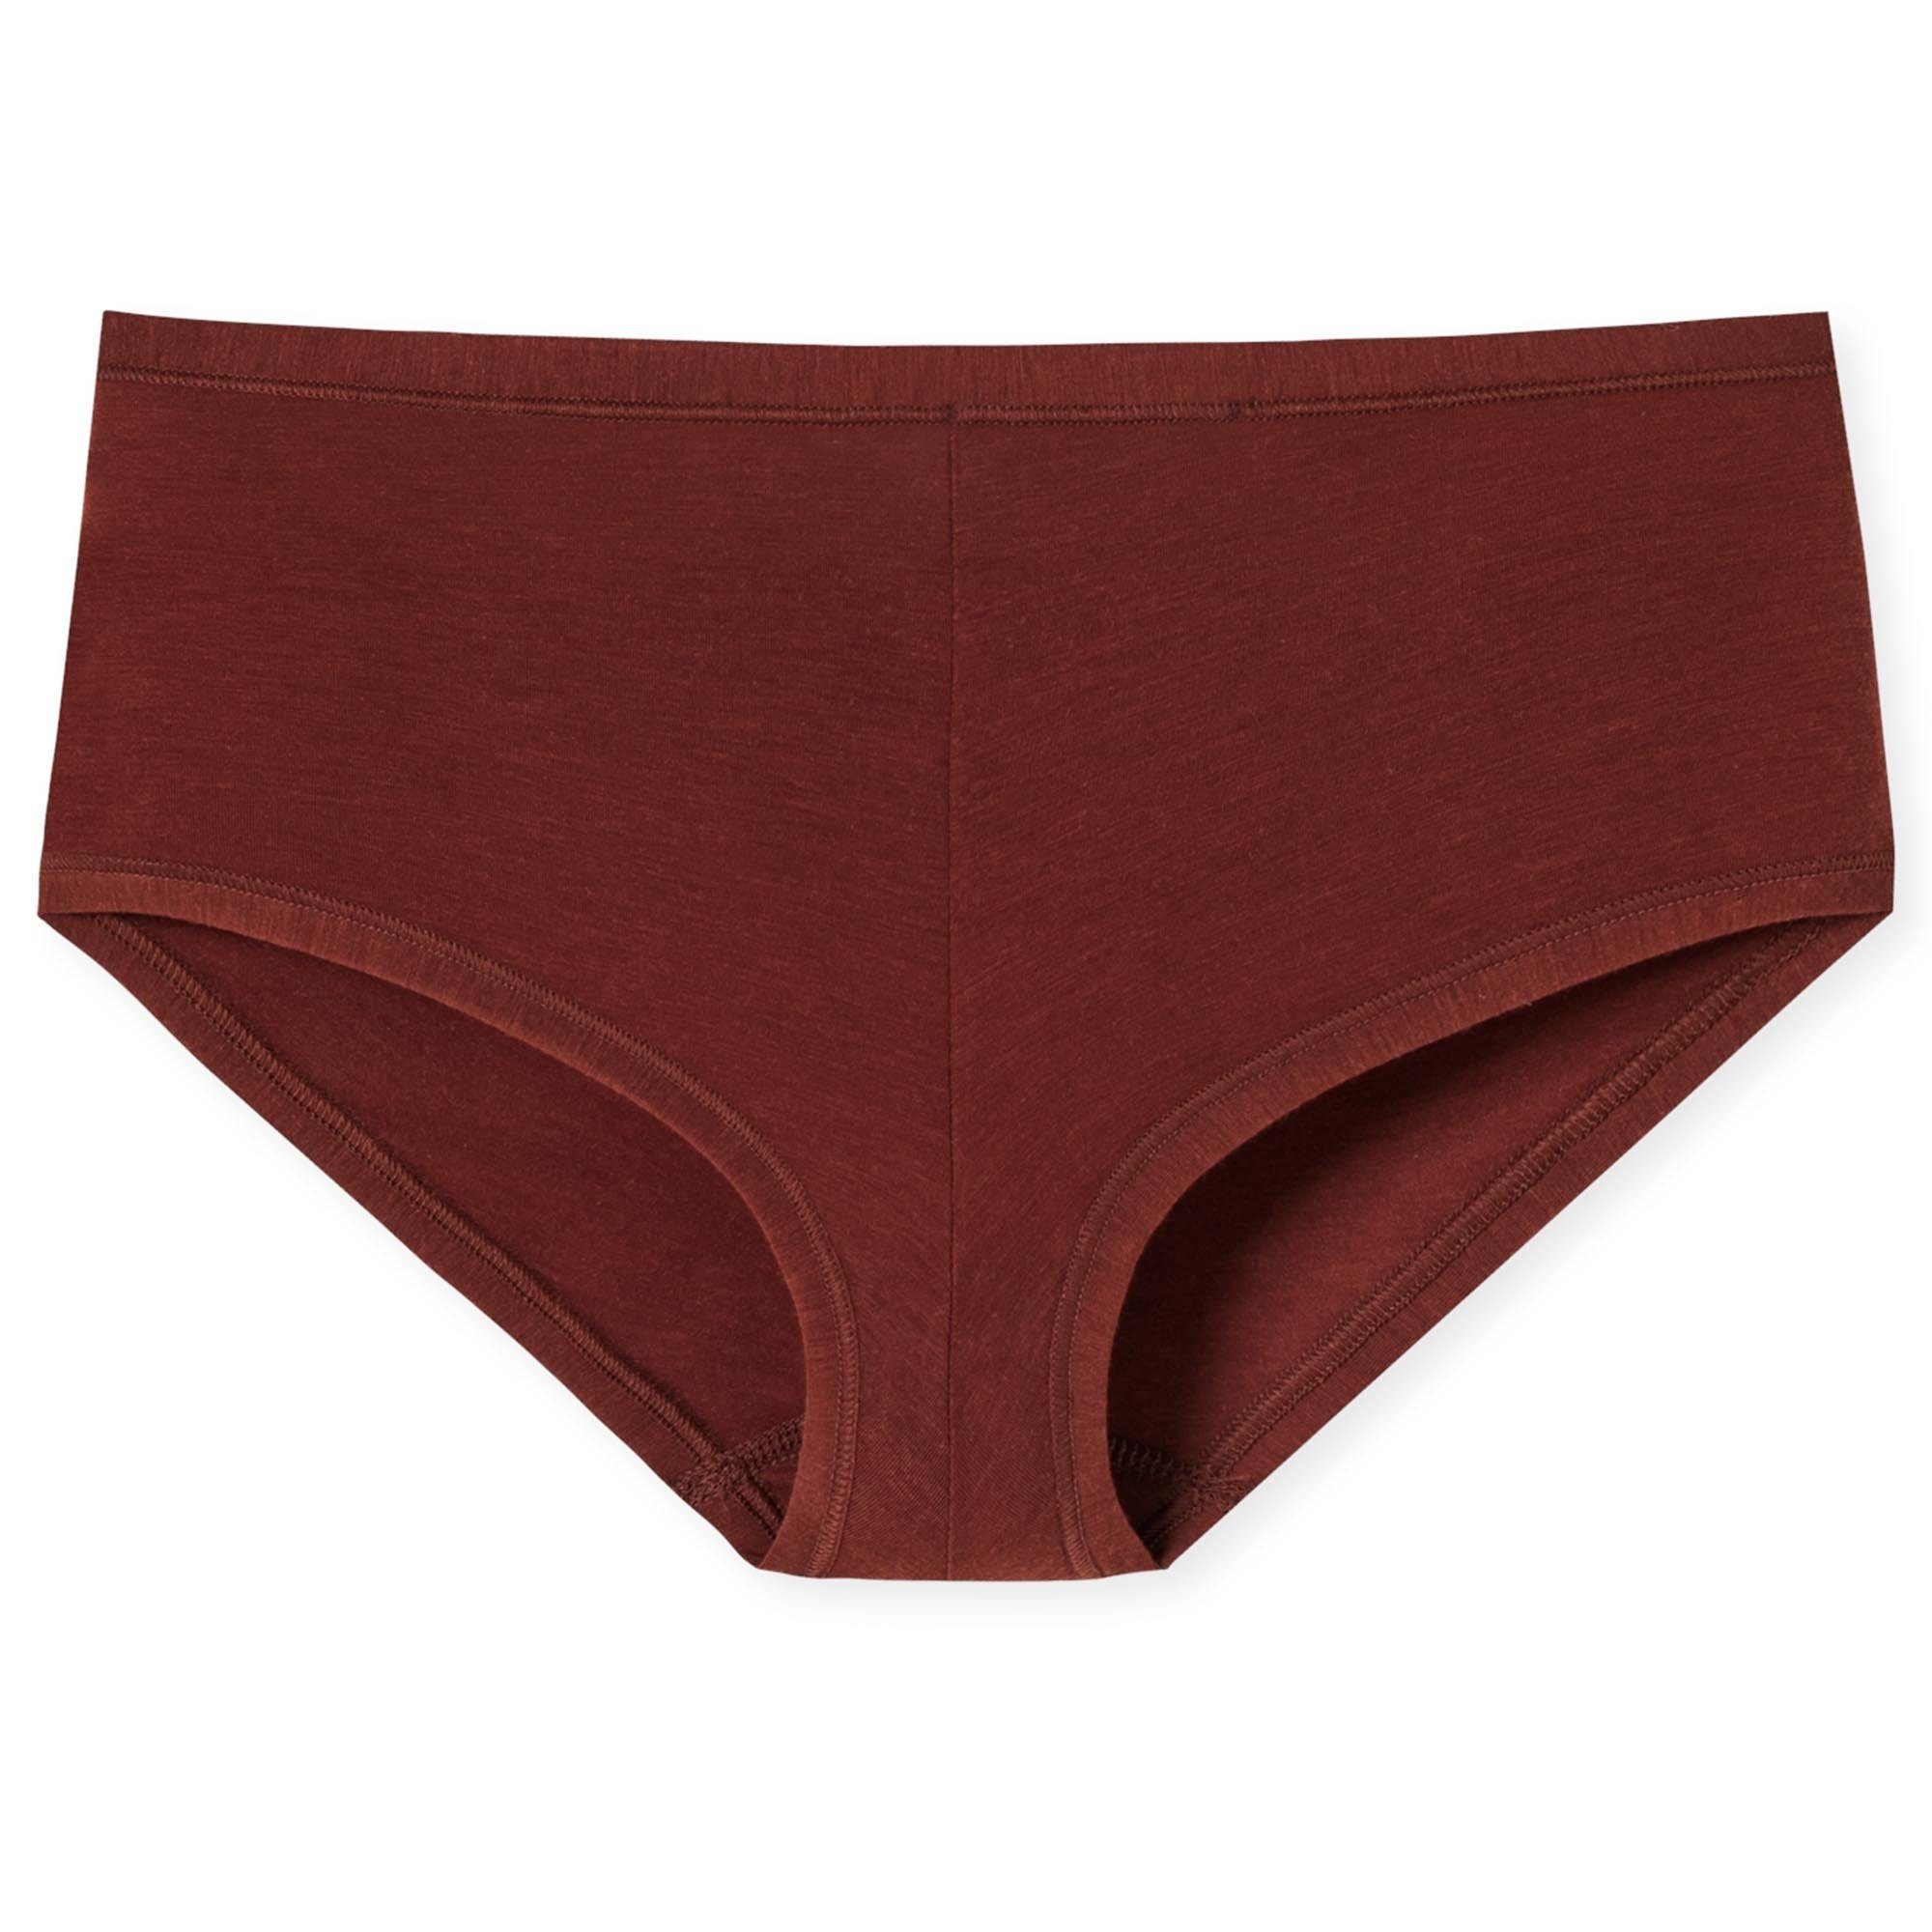 - Panty Damen Personal Terracotta Pants, Shorts Unterhose, Schiesser Slip,